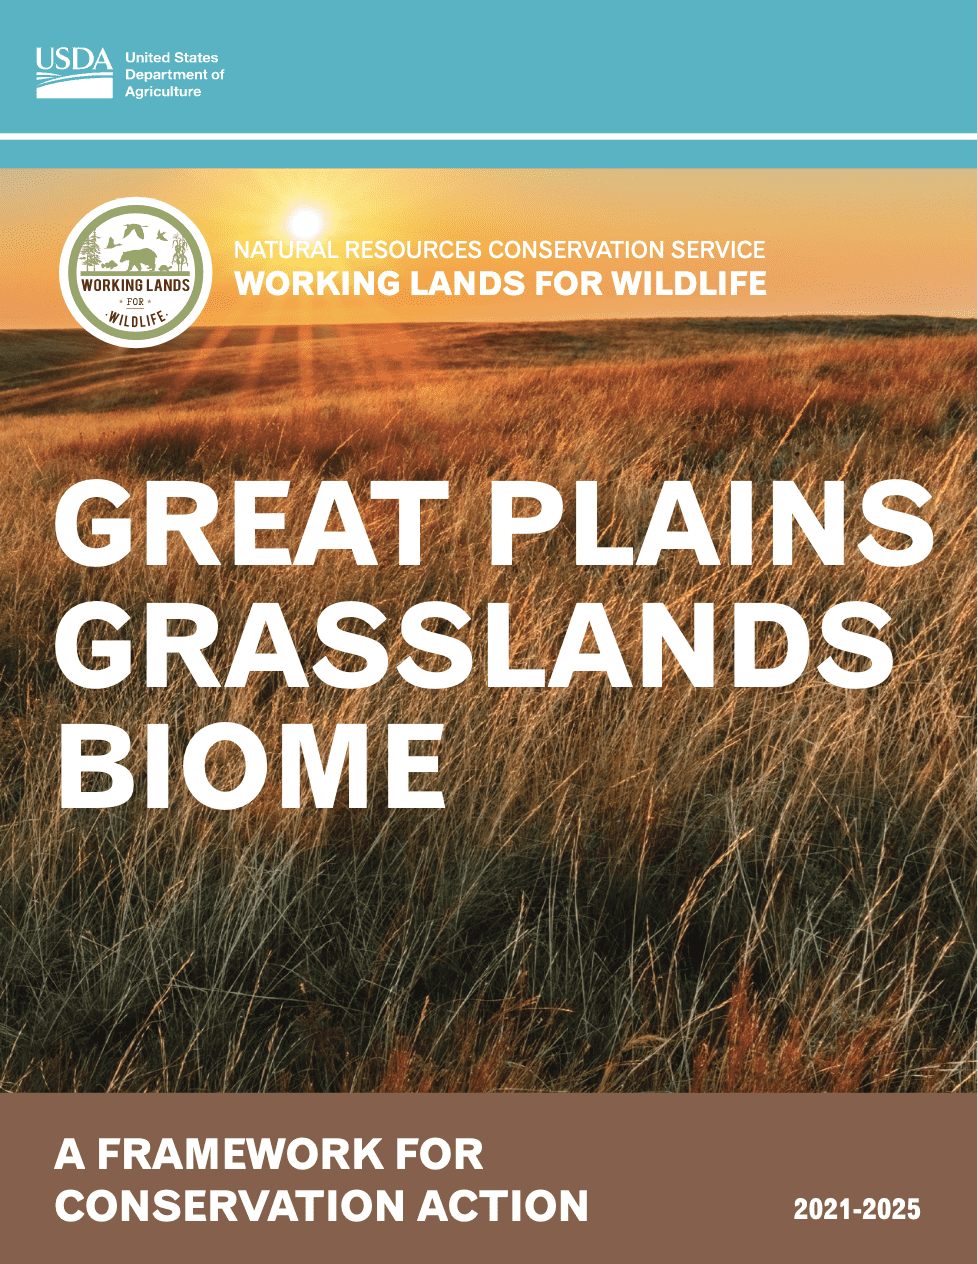 Framework for Conservation Action in the Great Plains Grasslands Biome